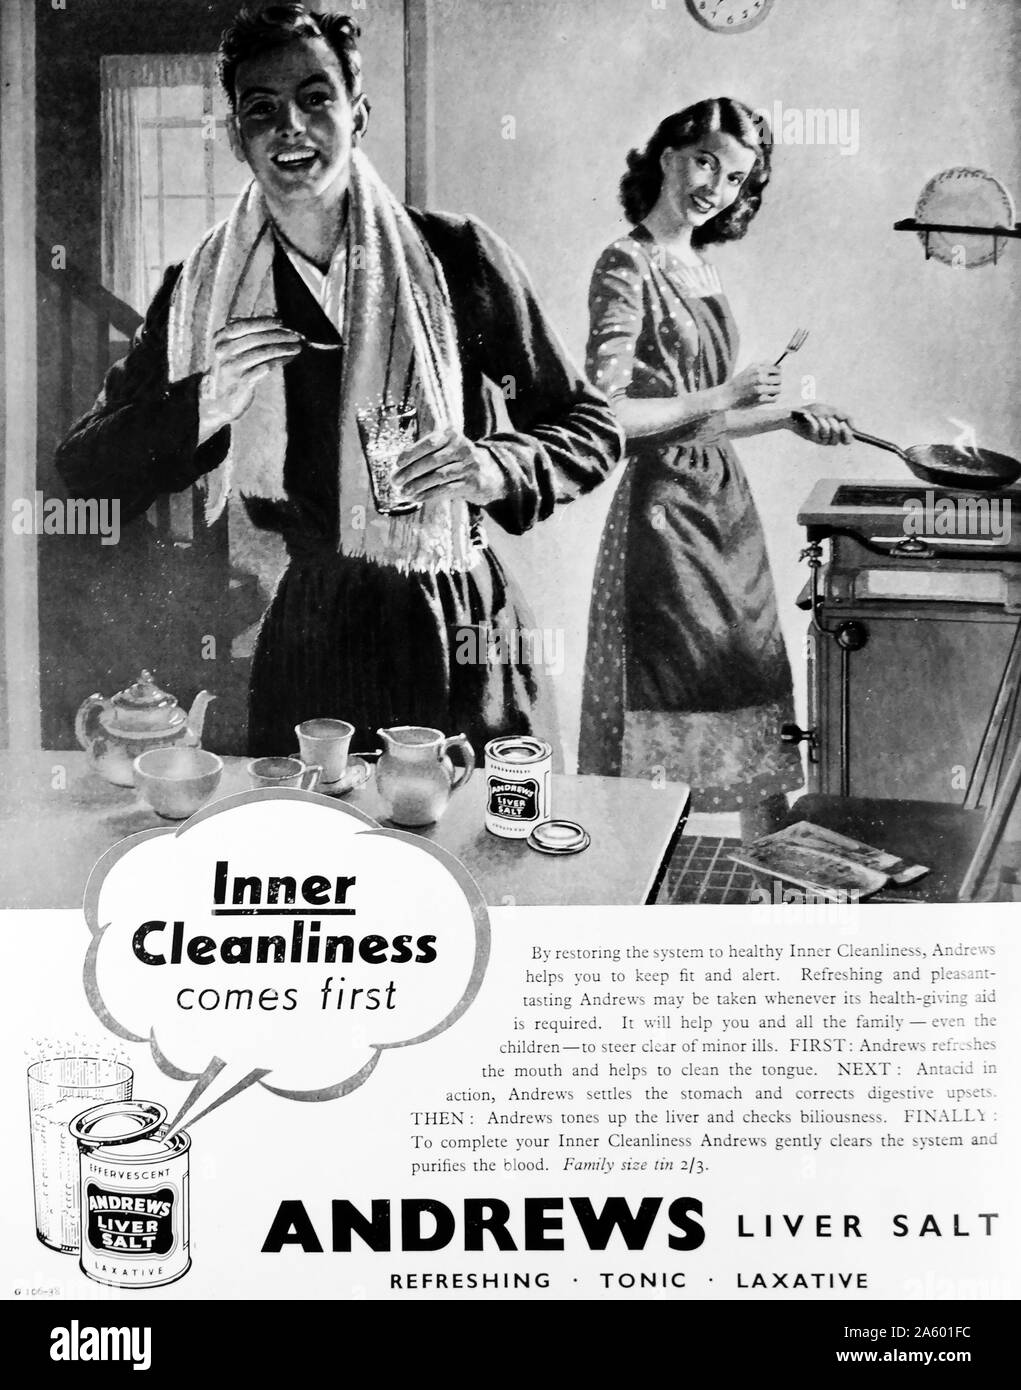 1960's Vintage Medicine Box - Dilaxin Laxative Medical Advertising